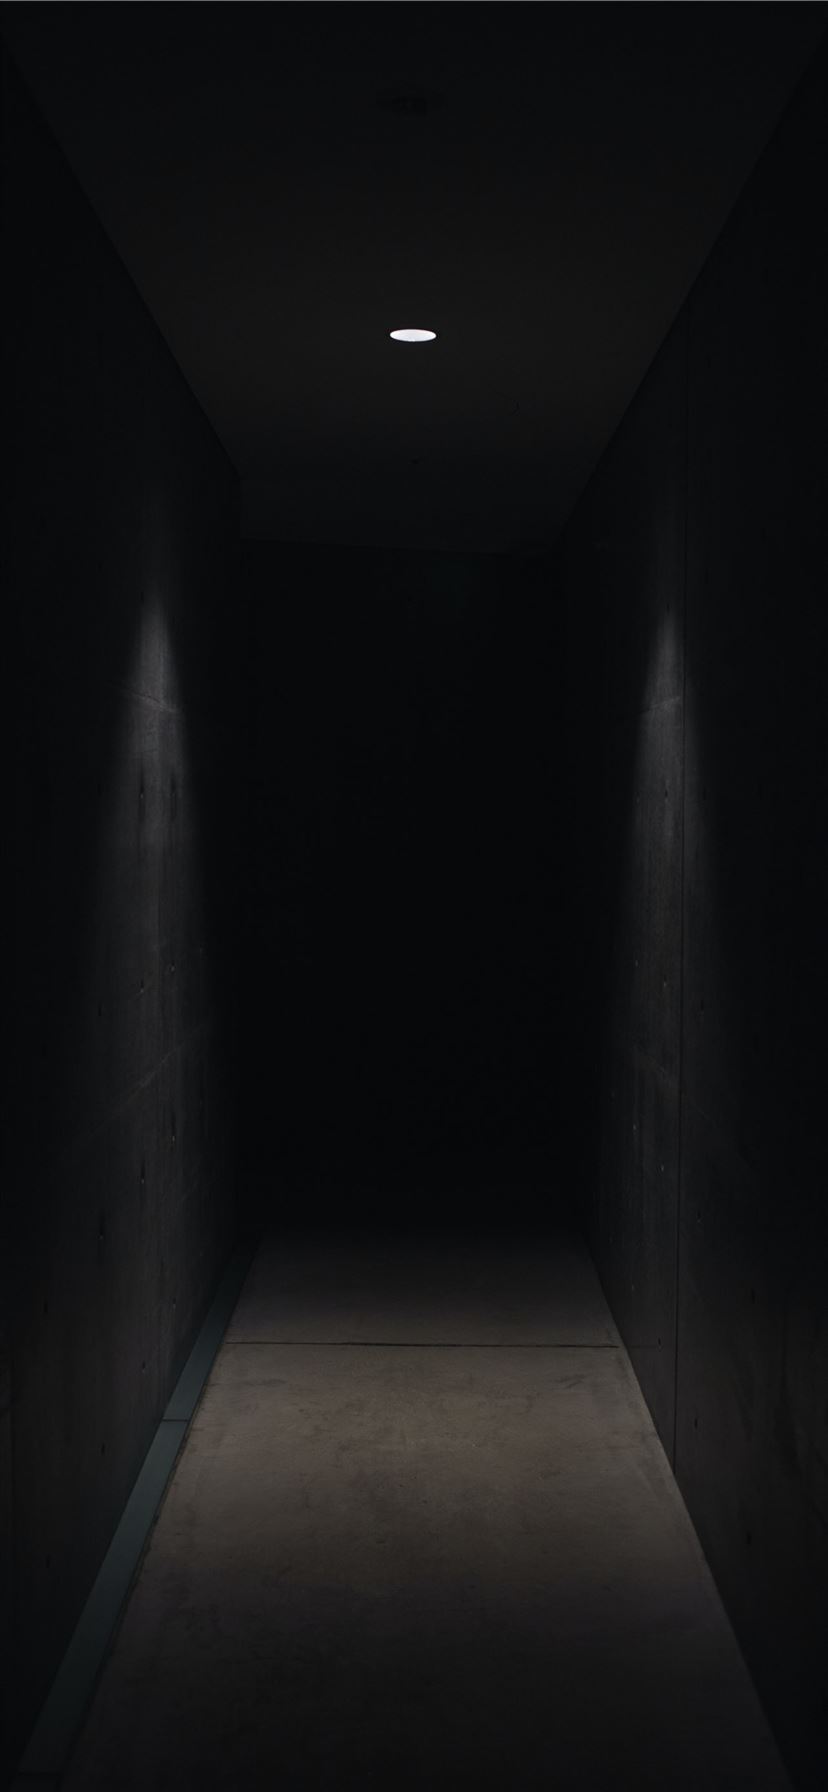 dark pathway lit with small light fixture iPhone 11 wallpaper 